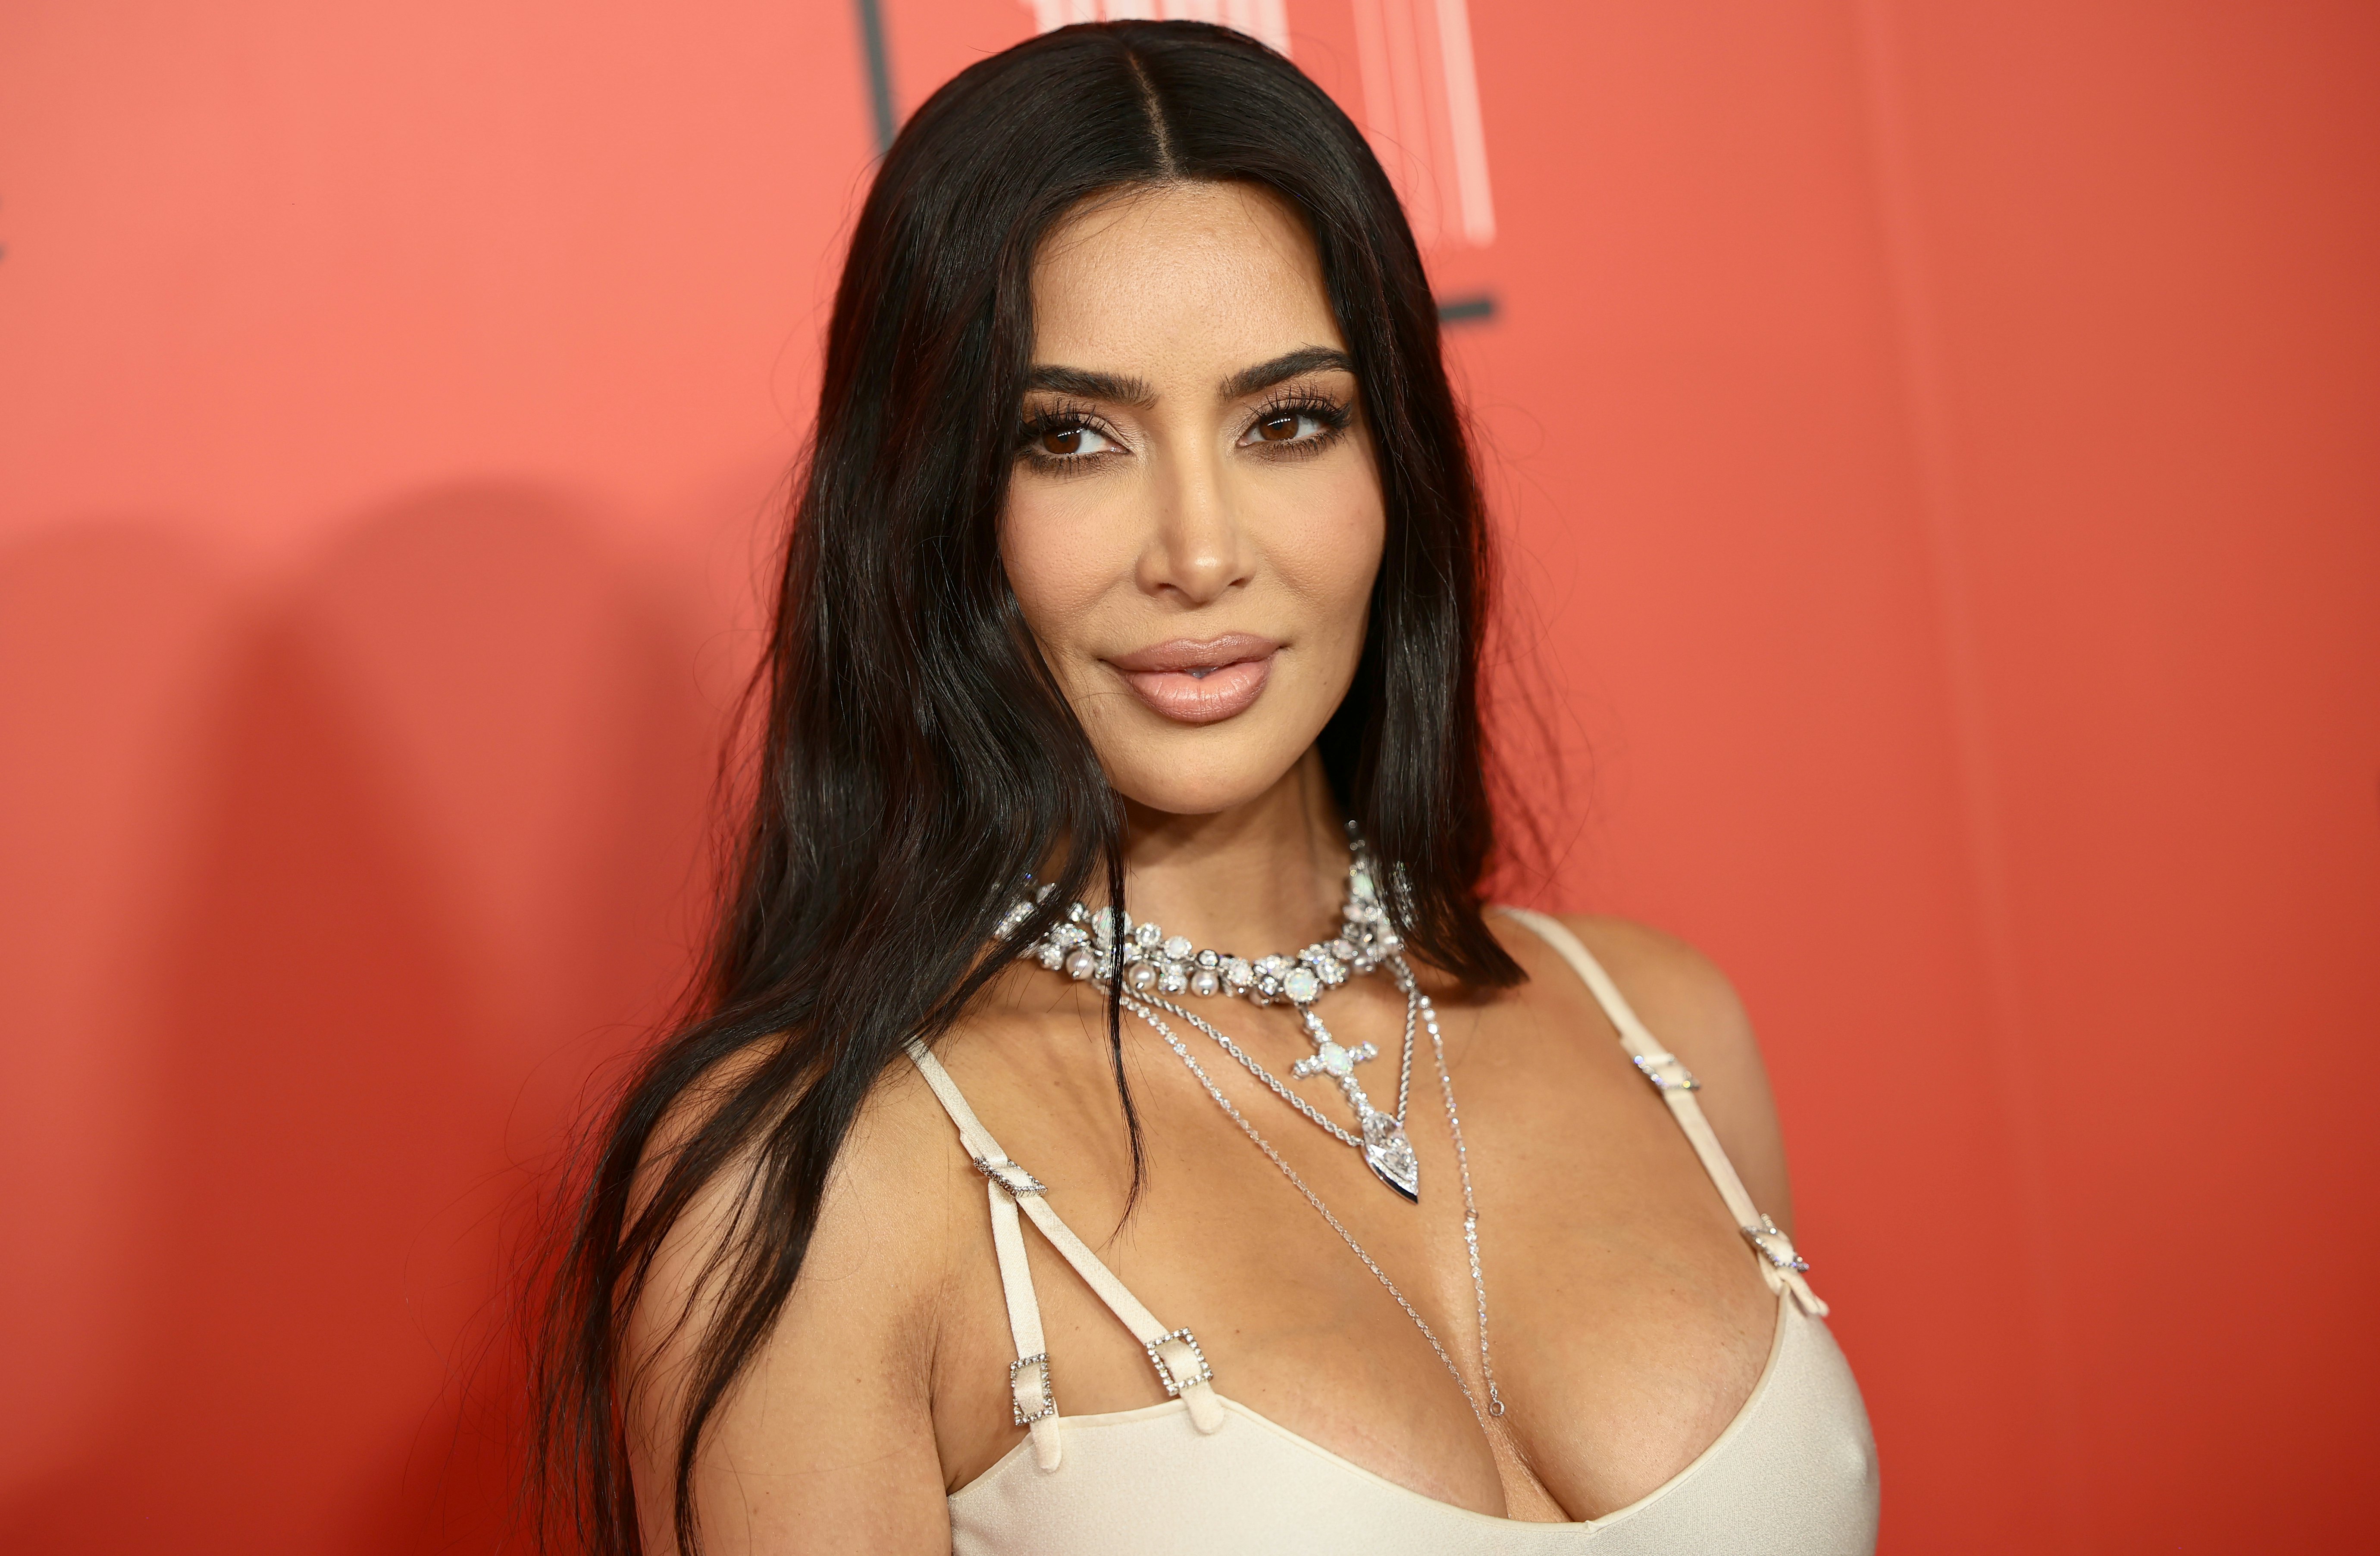 12 Times Kim Kardashian Made Freeing The Nipple Look So High-Fashion